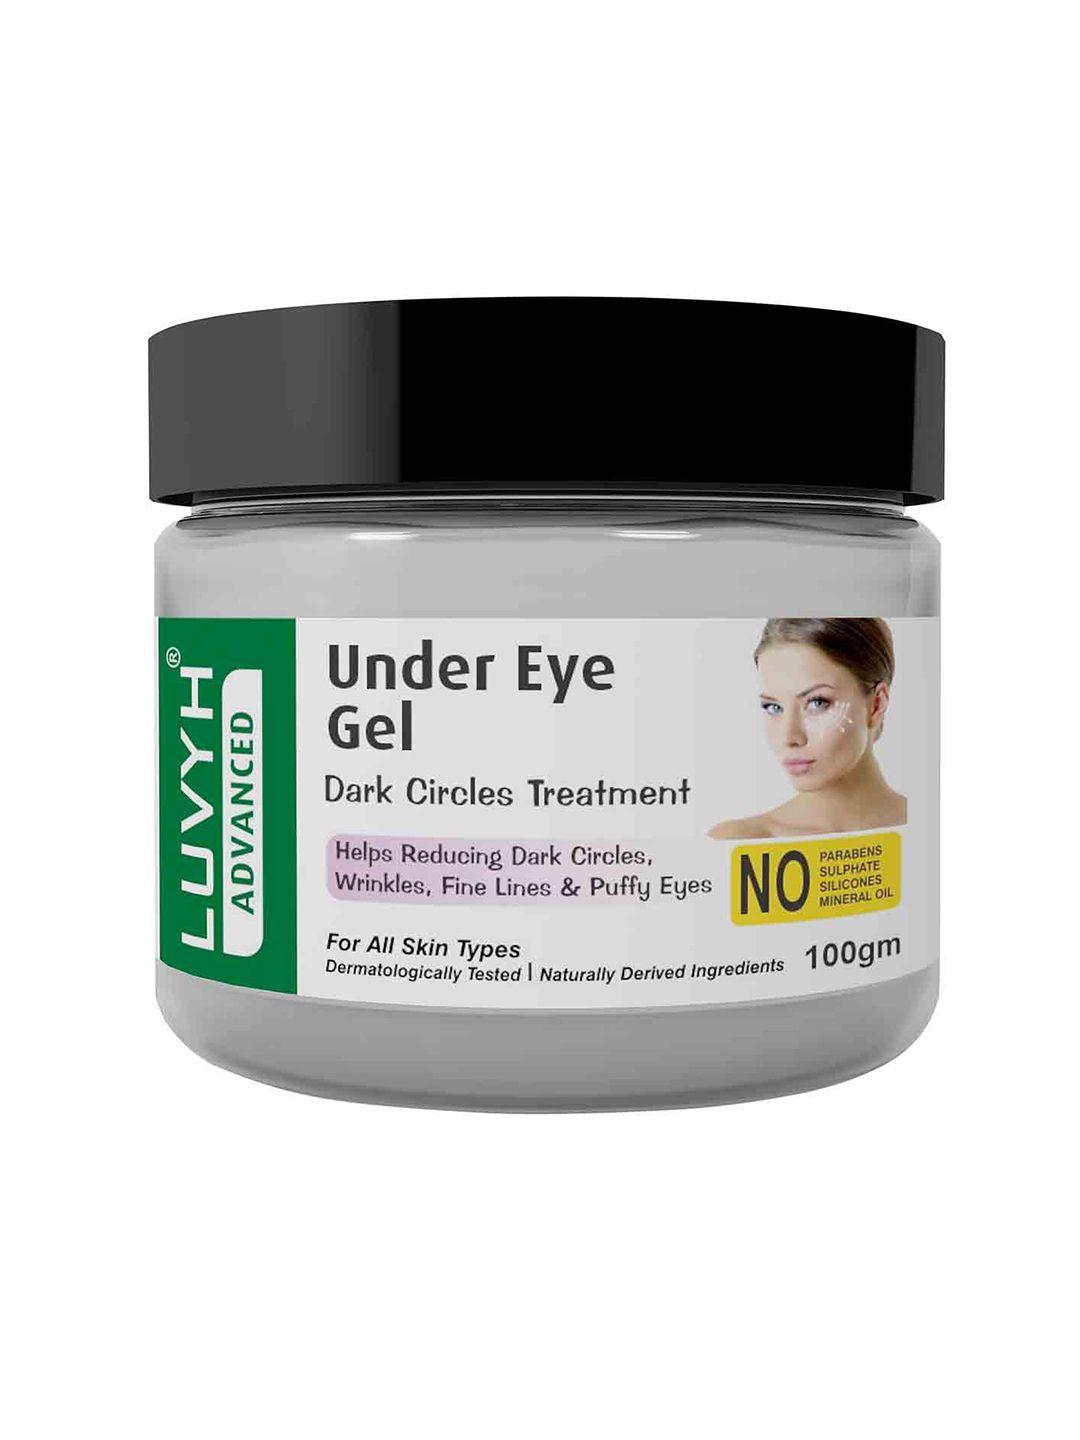 luvyh advanced under eye gel for dark circles treatment & fine lines - 100g